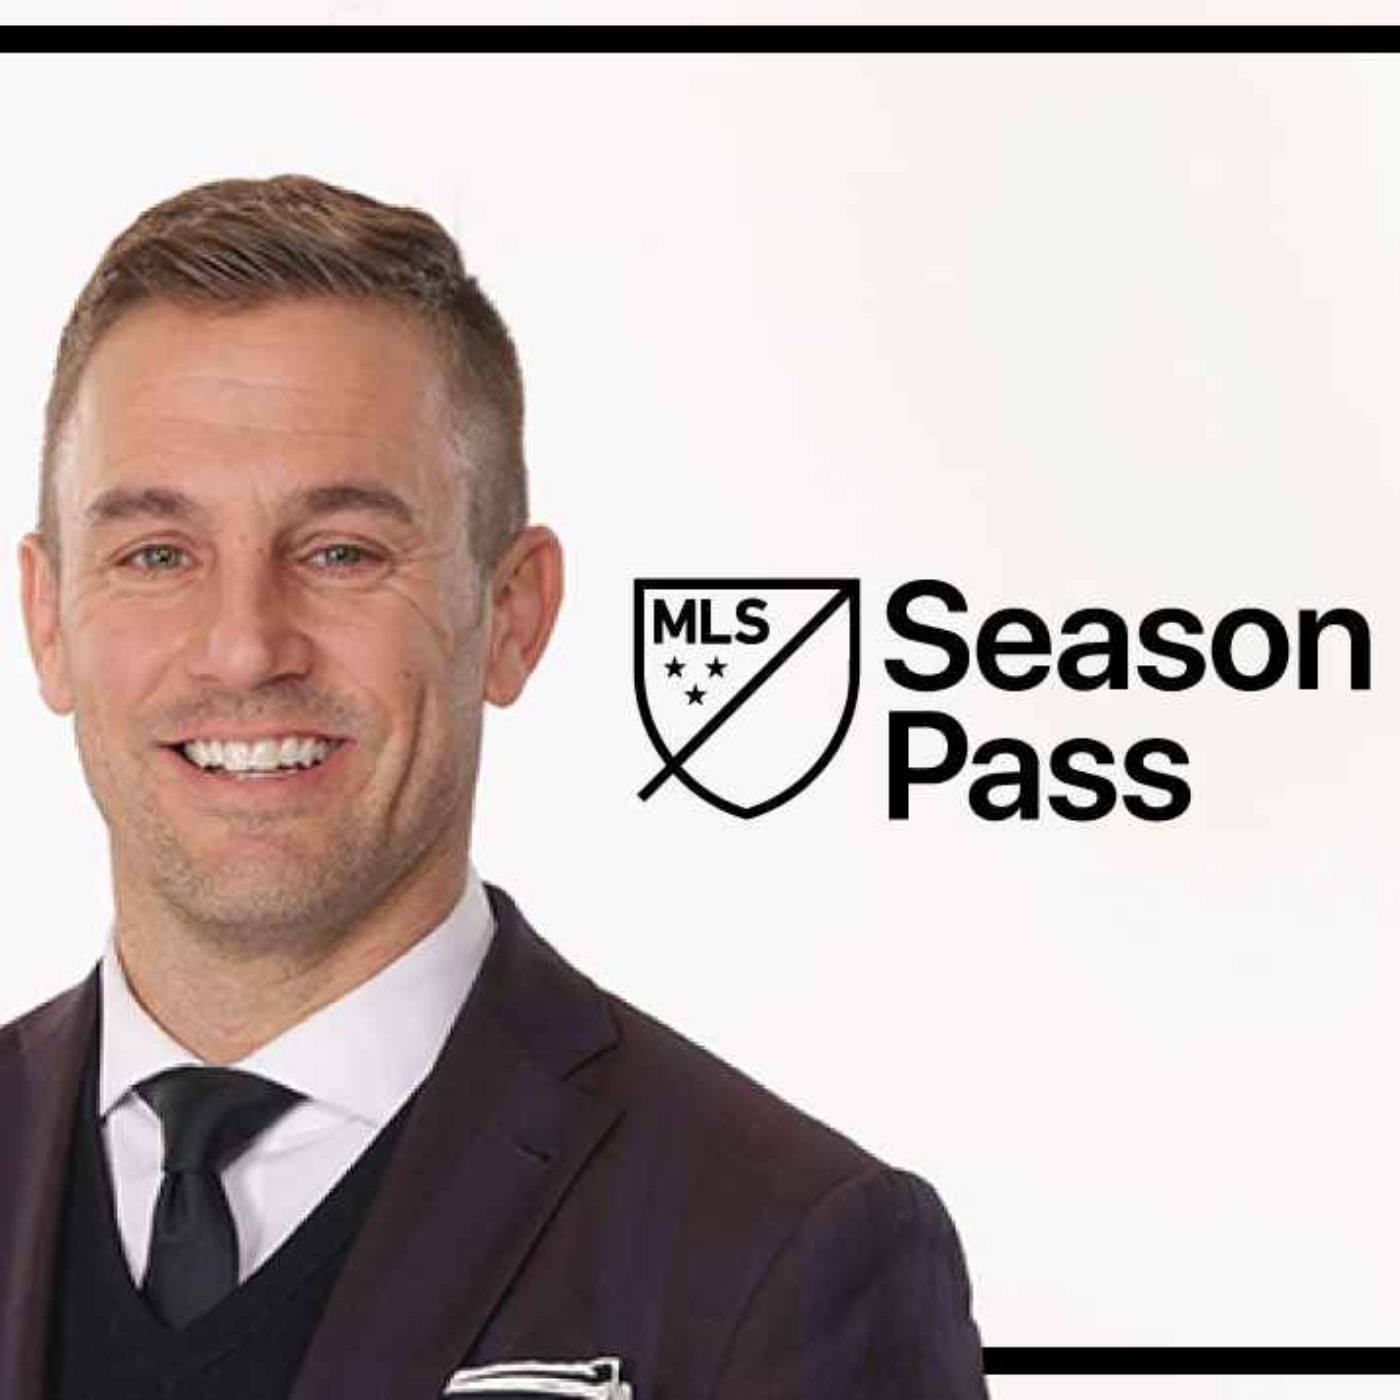 Taylor Twellman interview about MLS Season Pass